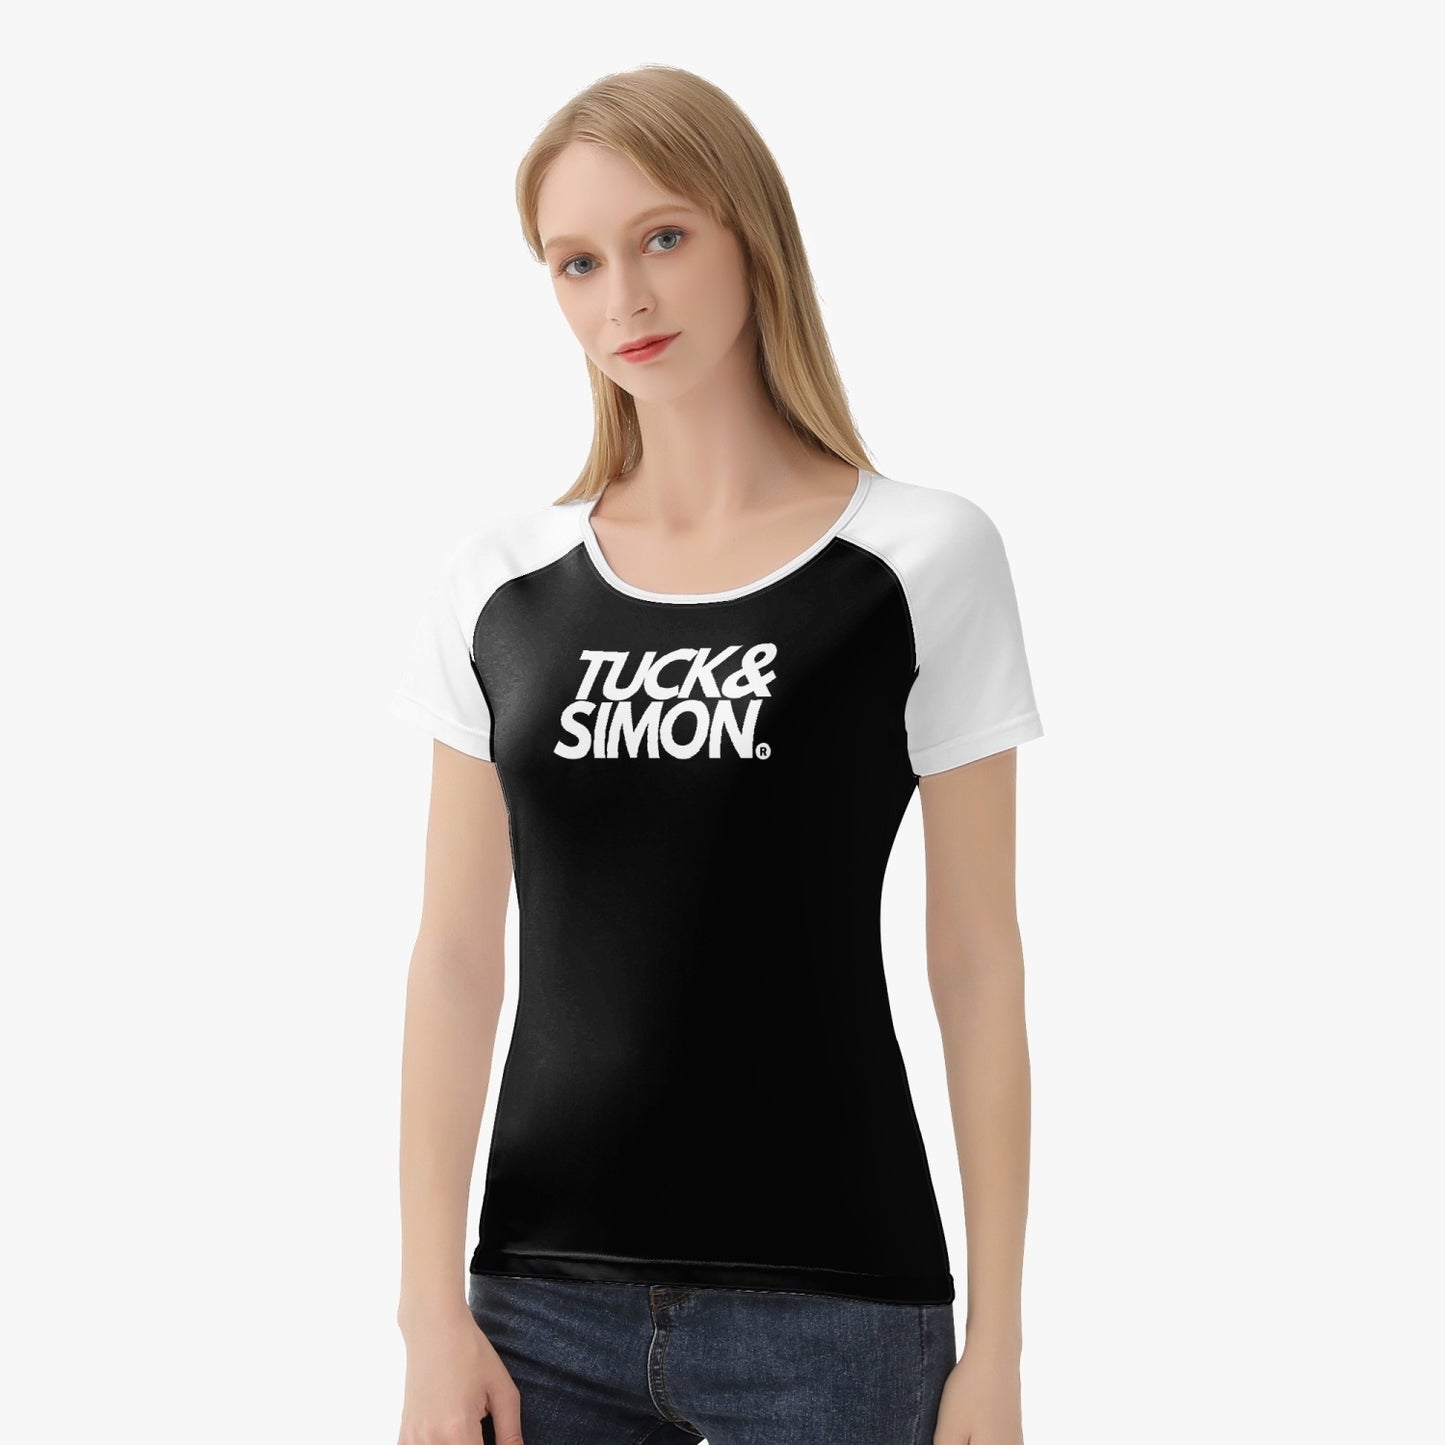 Teen Tuck&Simon Collegiate Casual T-Shirt